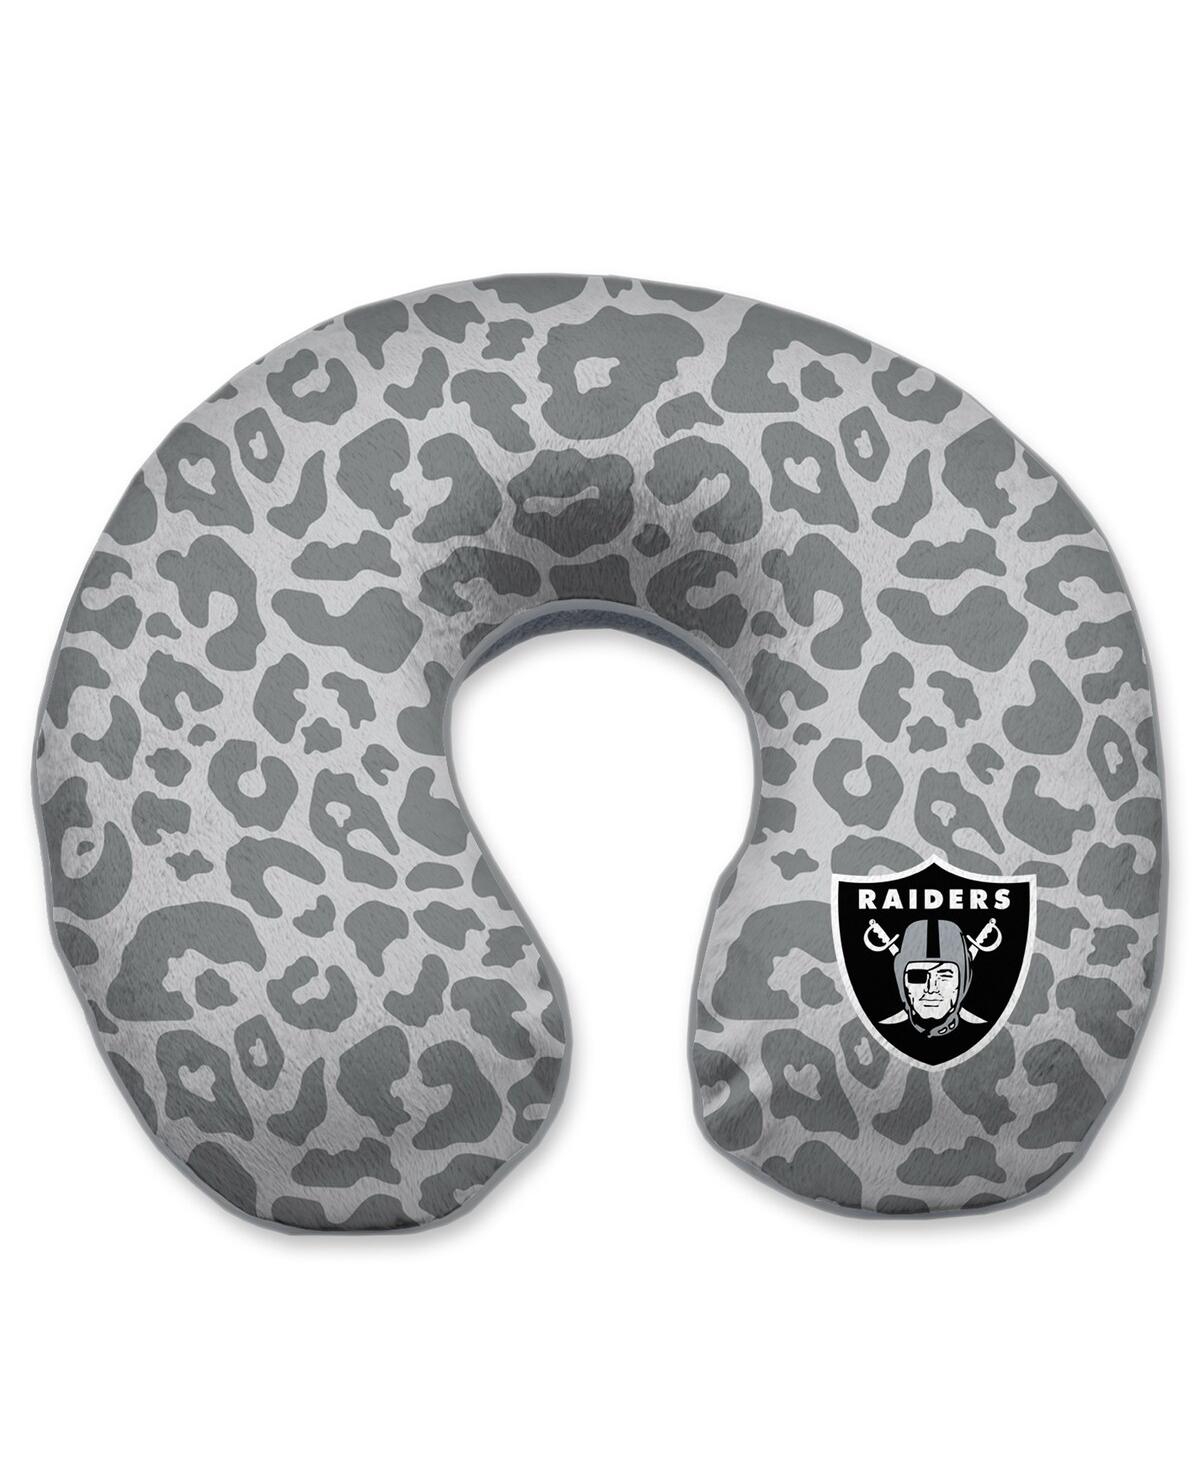 Pegasus Home Fashions Las Vegas Raiders Cheetah Print Memory Foam Travel Pillow In Gray